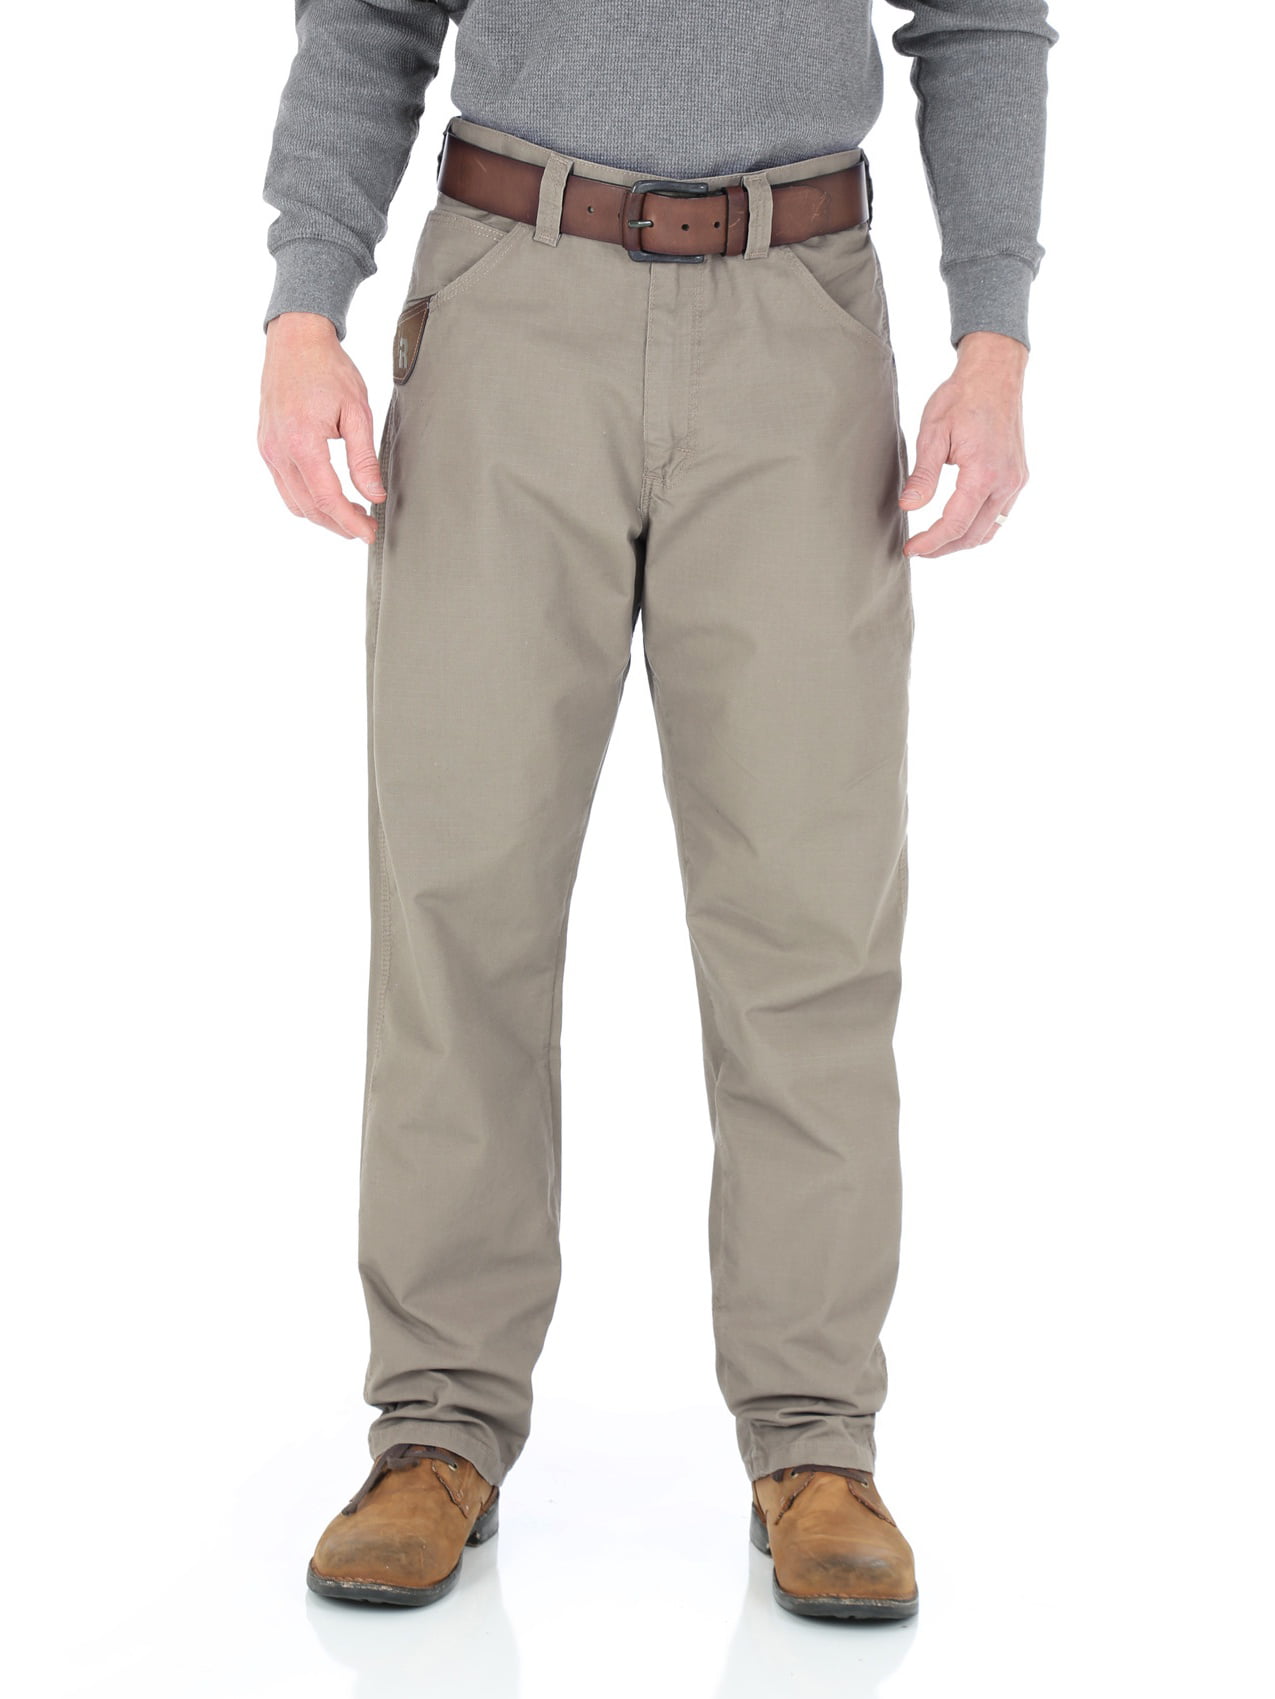 Wrangler - Wrangler Men's RIGGS Workwear Technician Pants - Dark Khaki ...